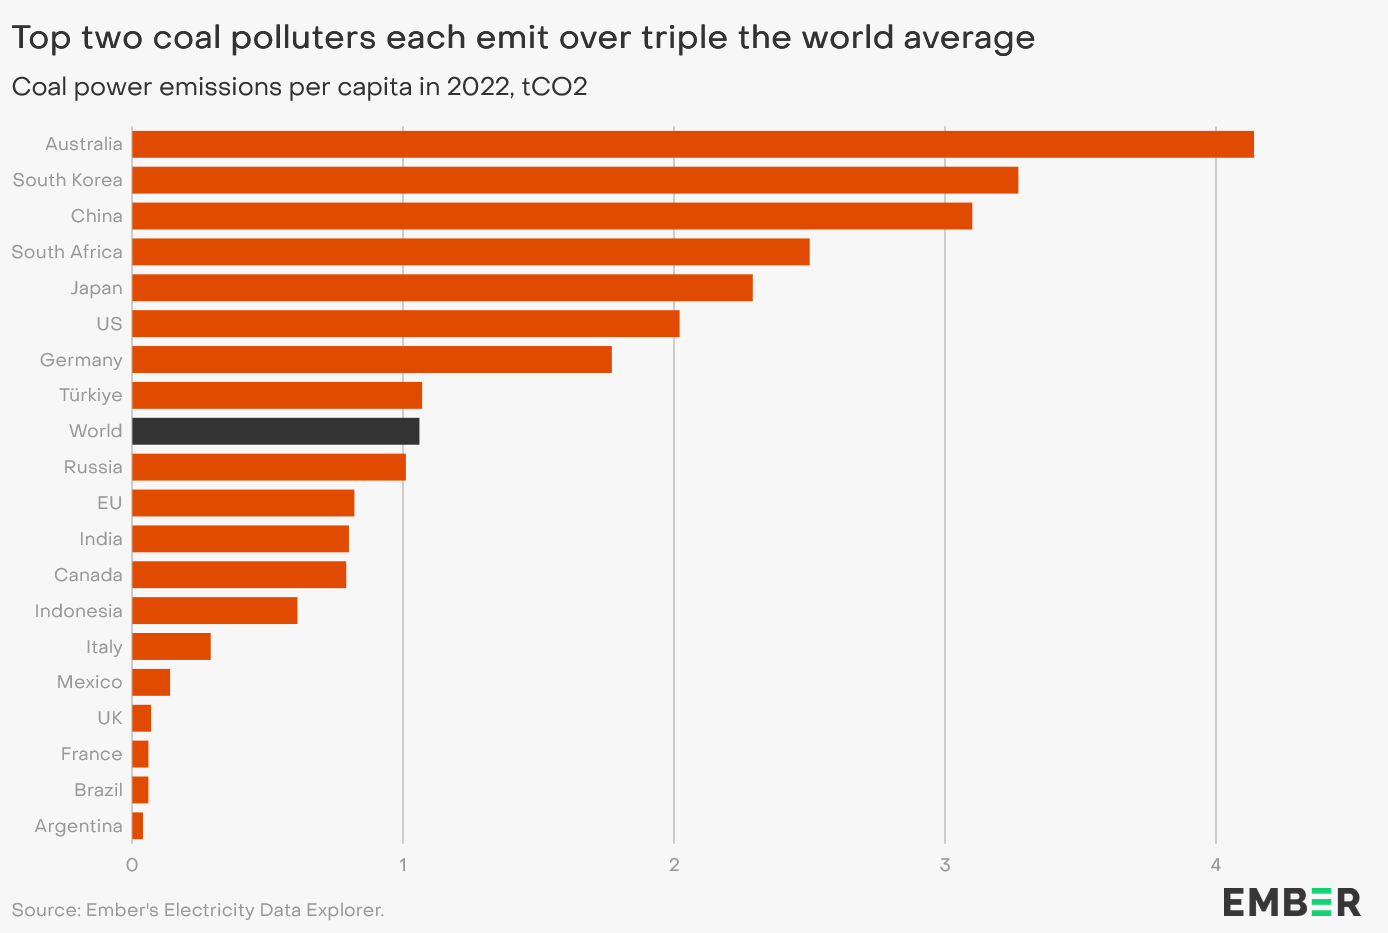 Top coal polluters 
Source: Ember